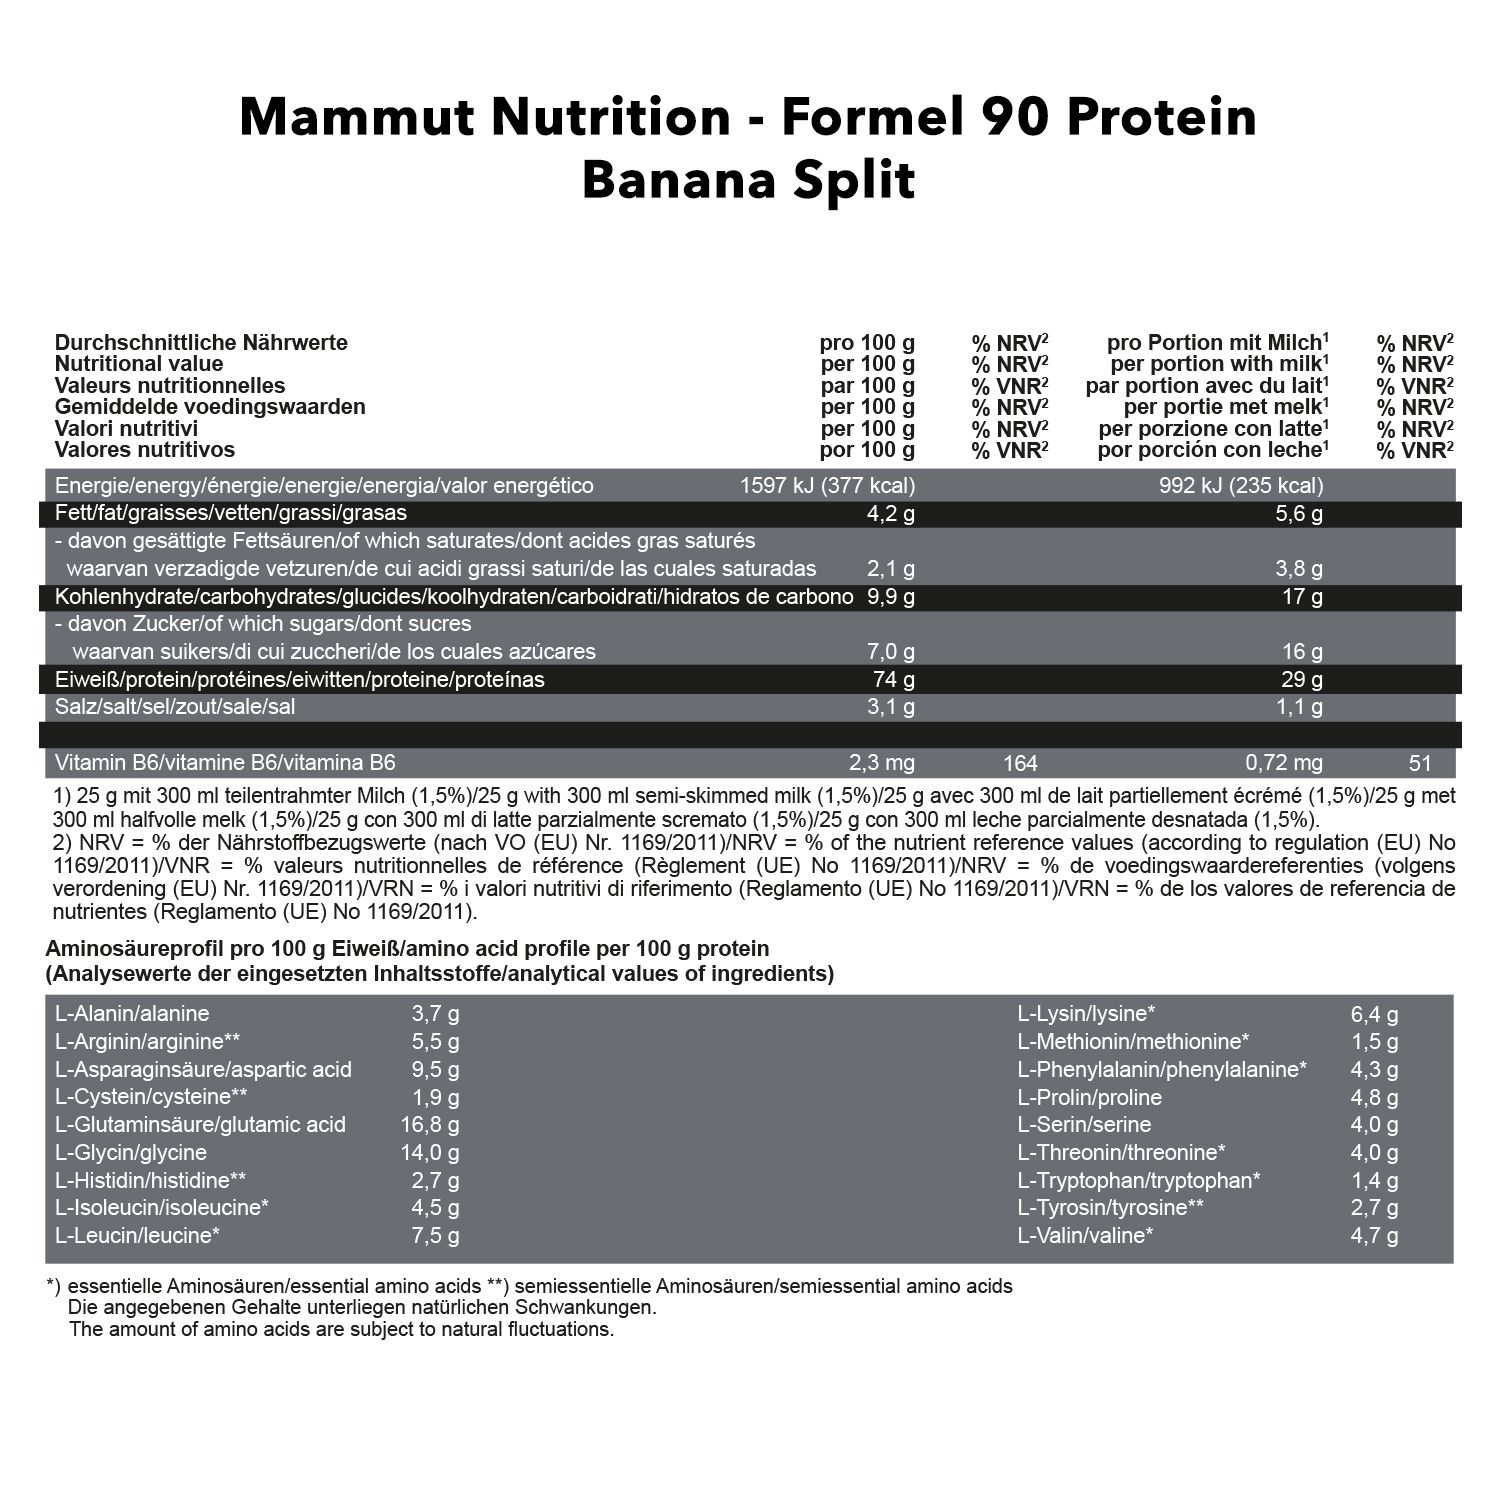 Mammut Formel 90 Protein, Banana Split